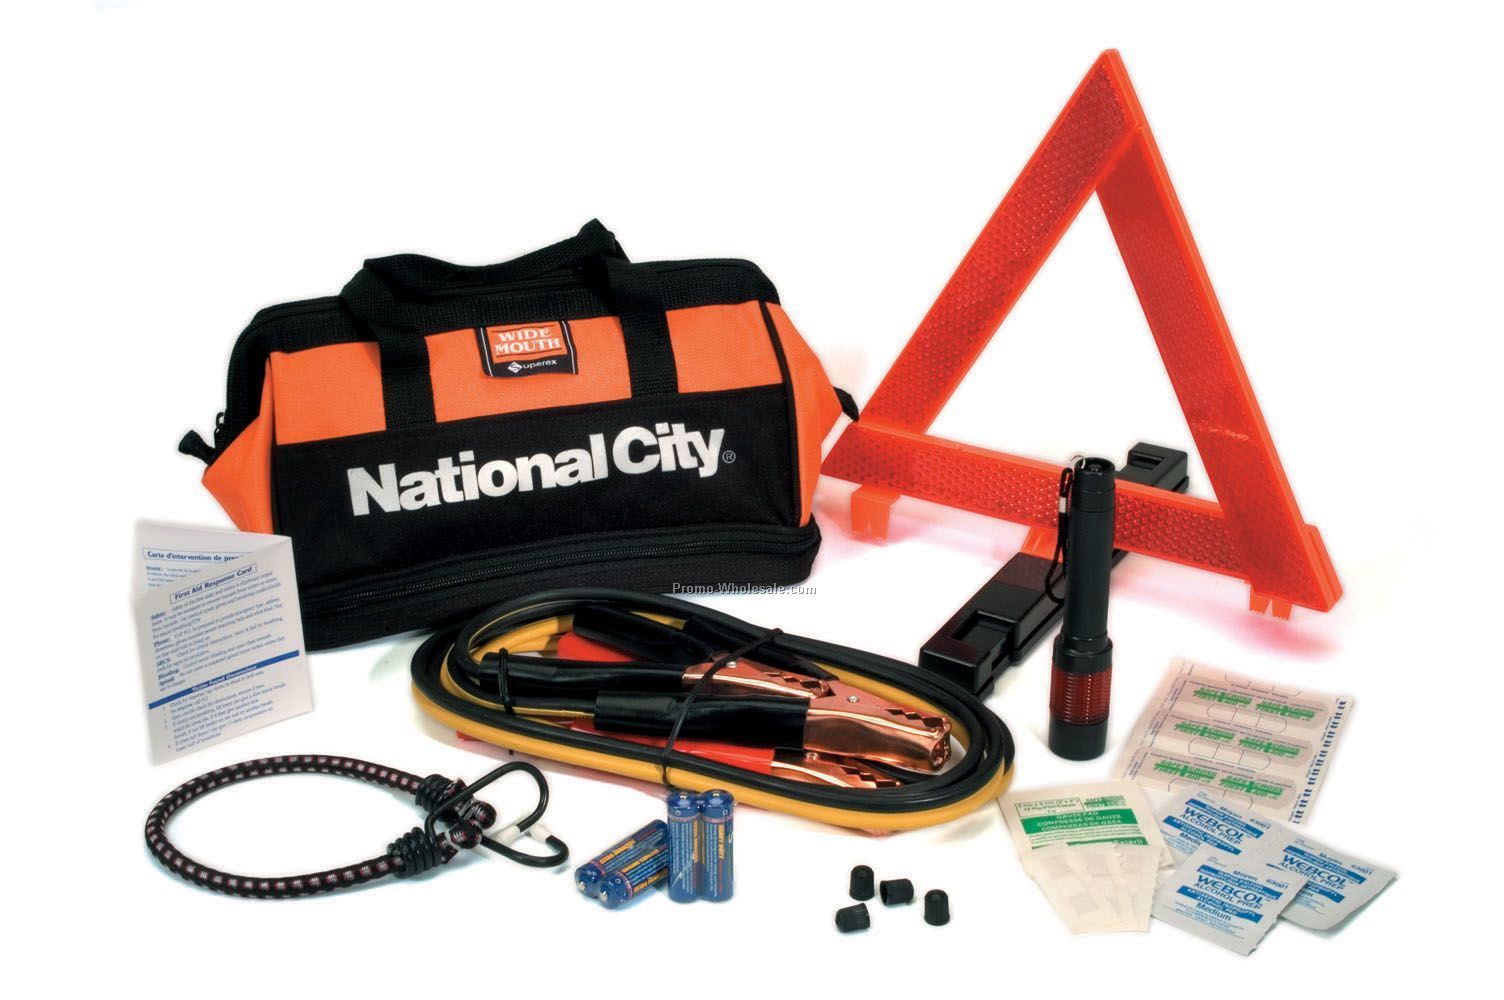 Jr. Widemouth Emergency Kit